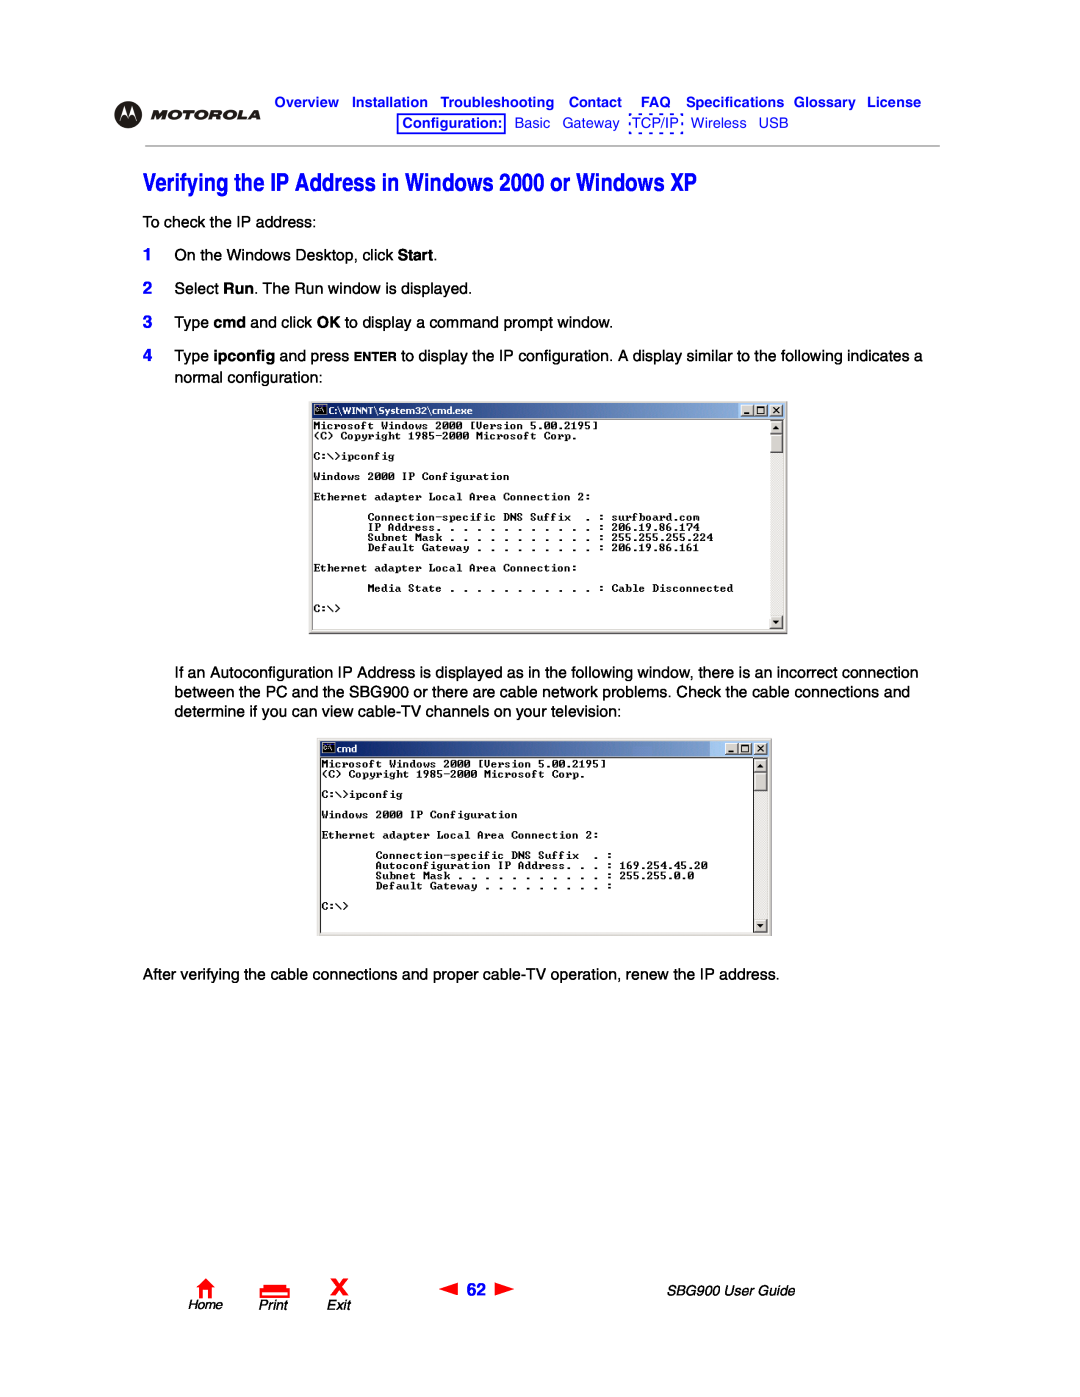 Motorola SBG900 manual Verifying the IP Address in Windows 2000 or Windows XP 